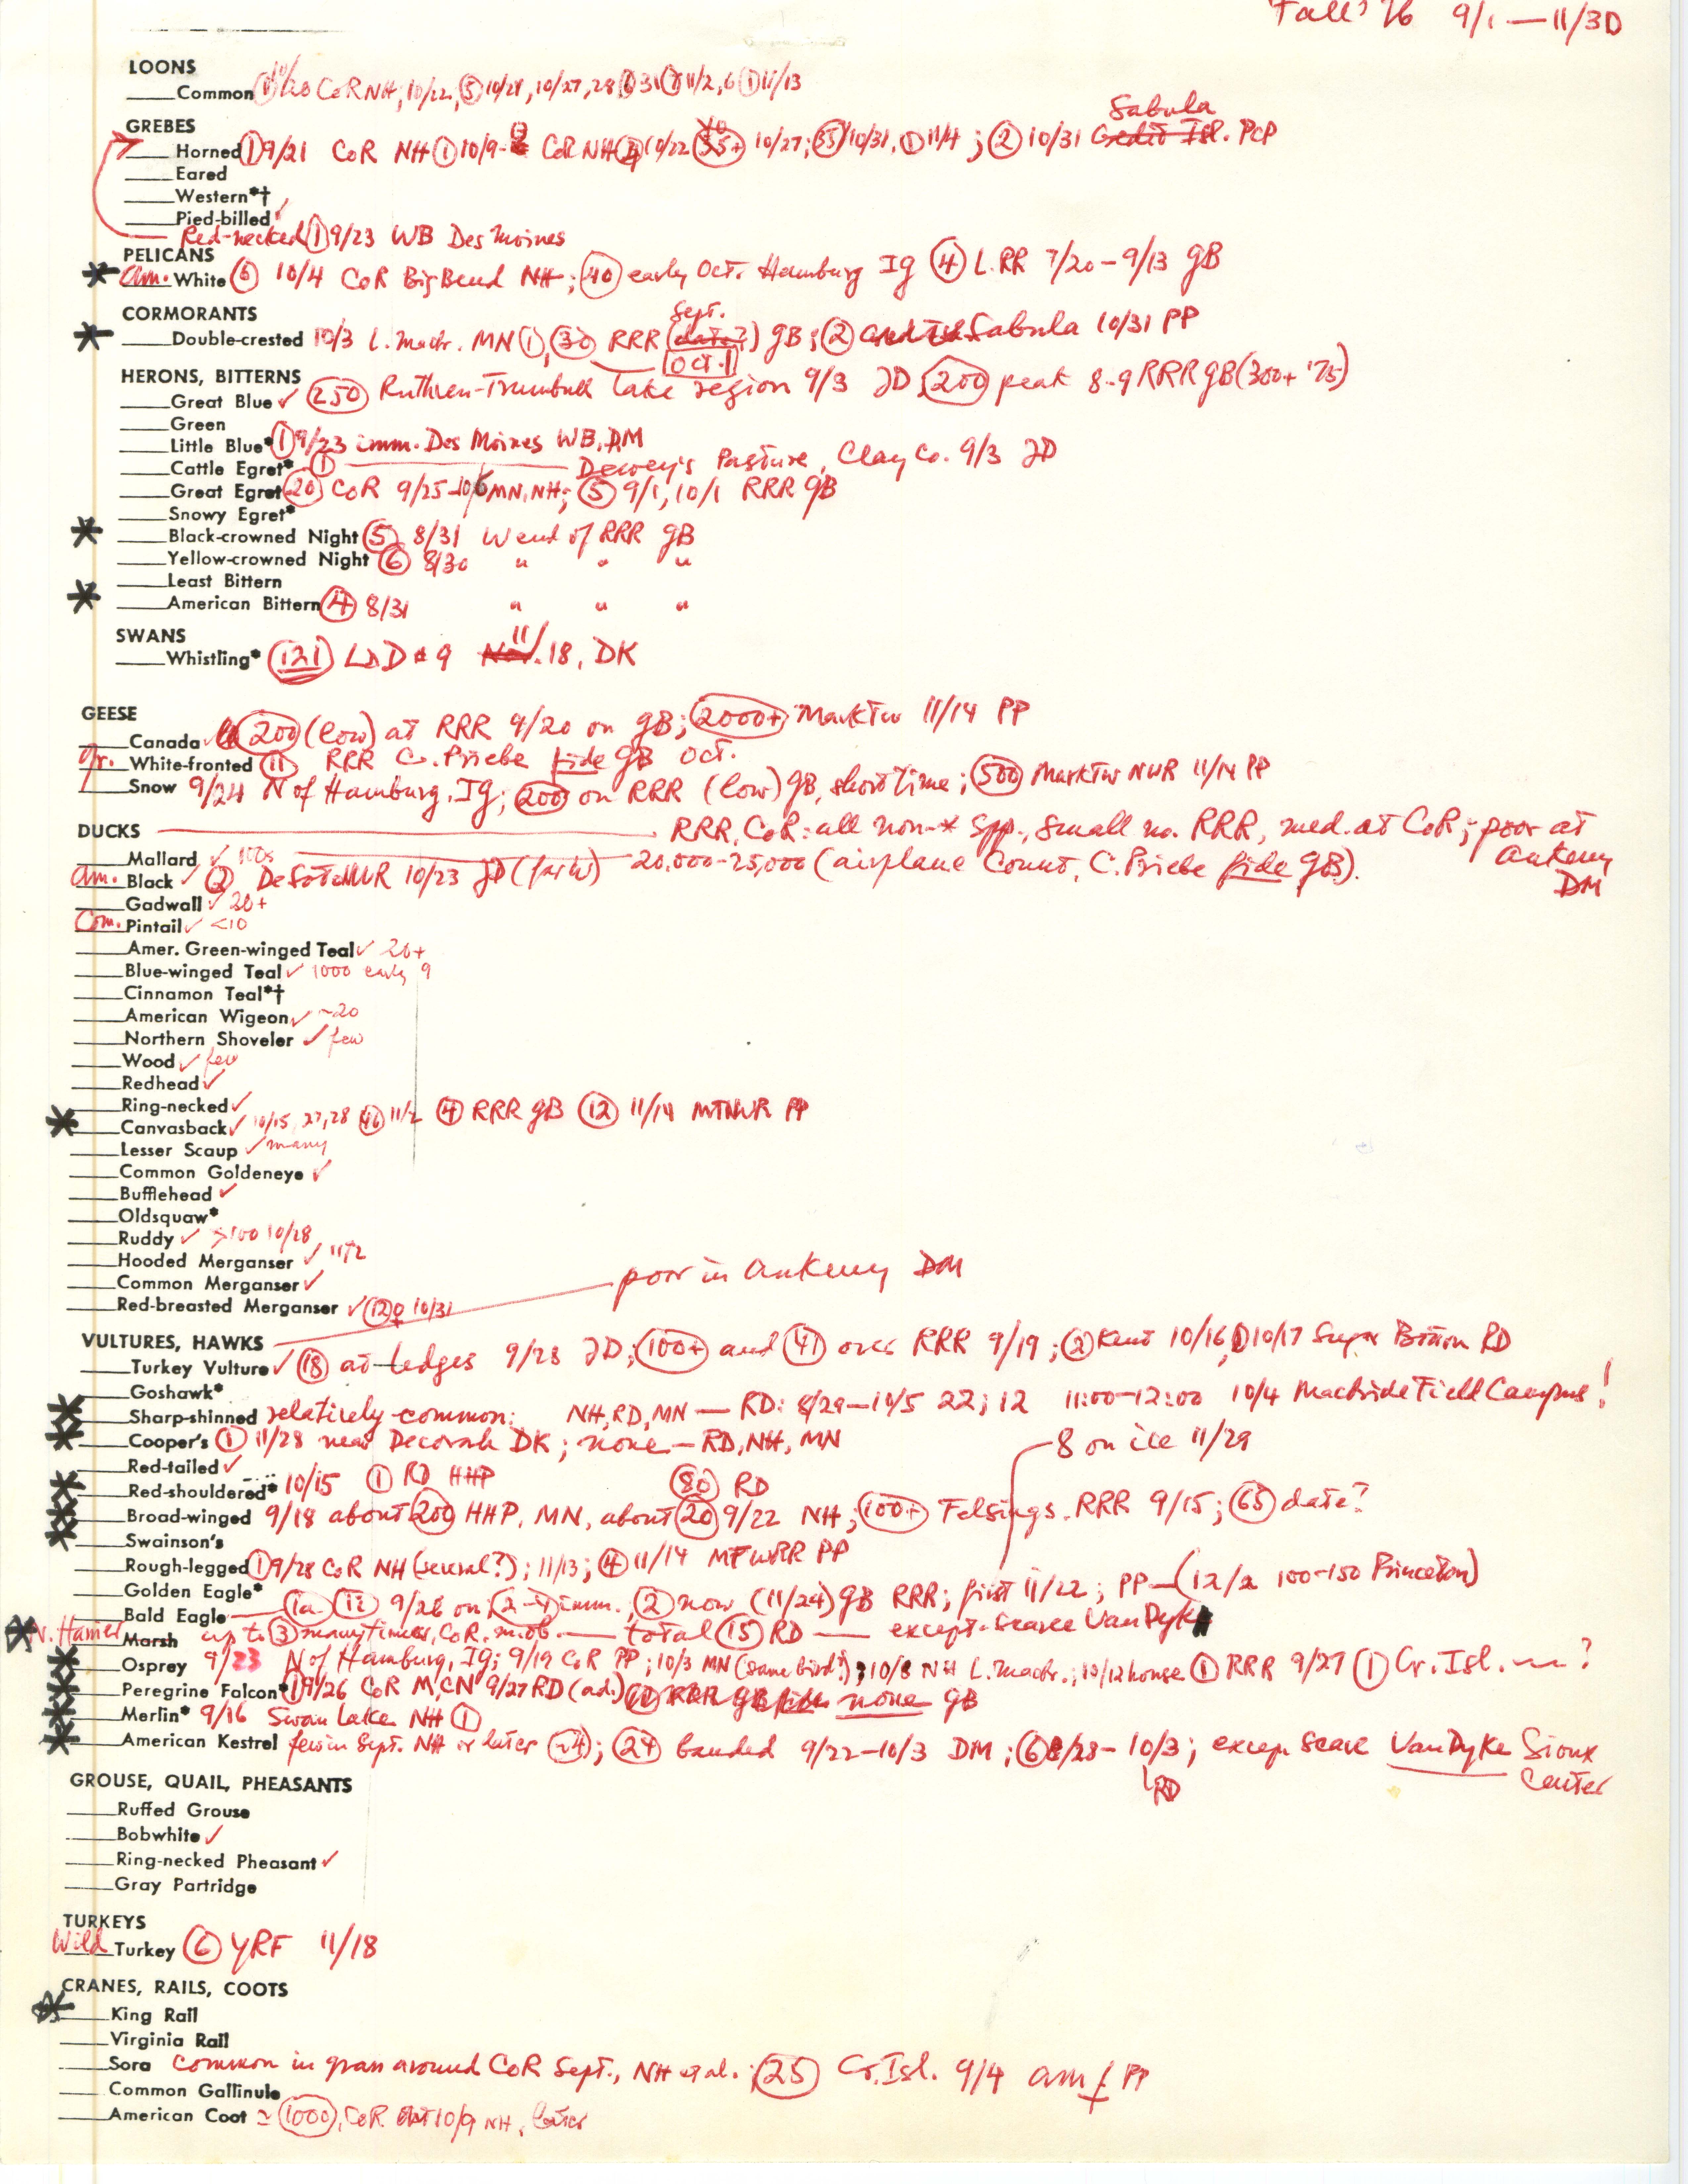 Bird sightings checklist, fall 1976